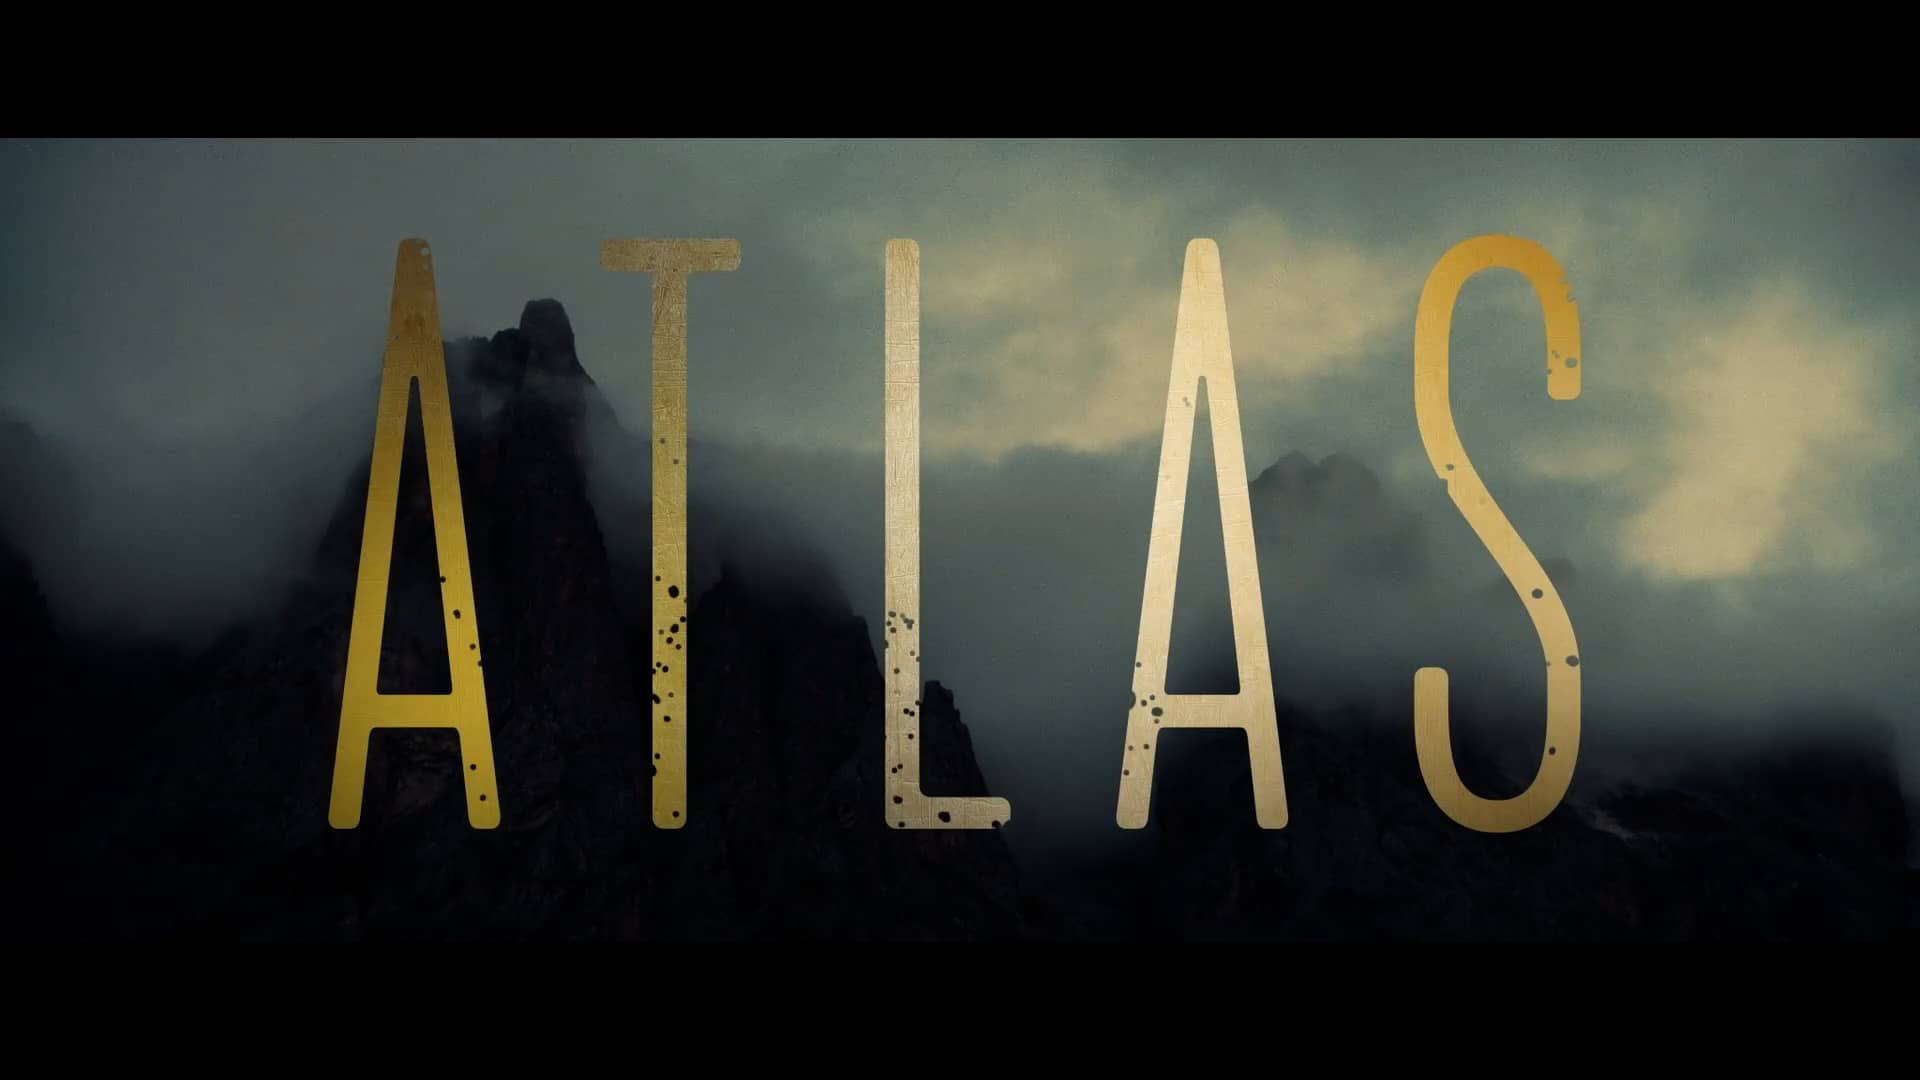 ATLAS [trailer ENGLISH 2021] on Vimeo